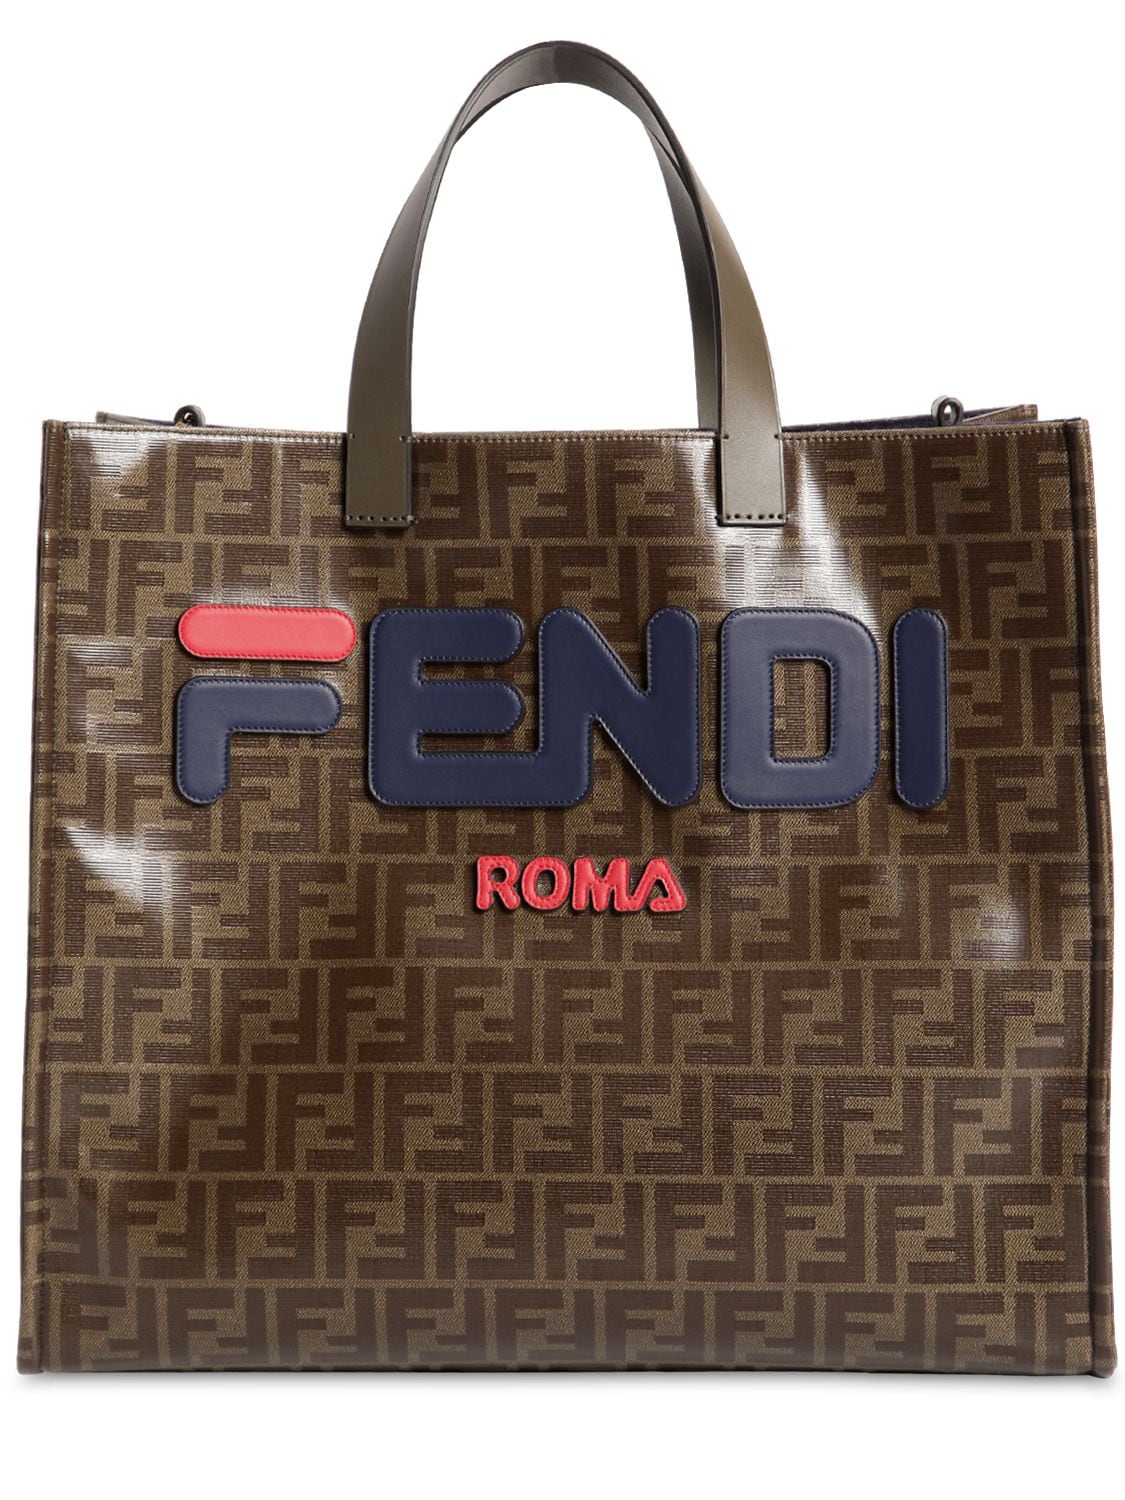 FENDI MANIA logo printed travel bag - Coated canvas - Brand new